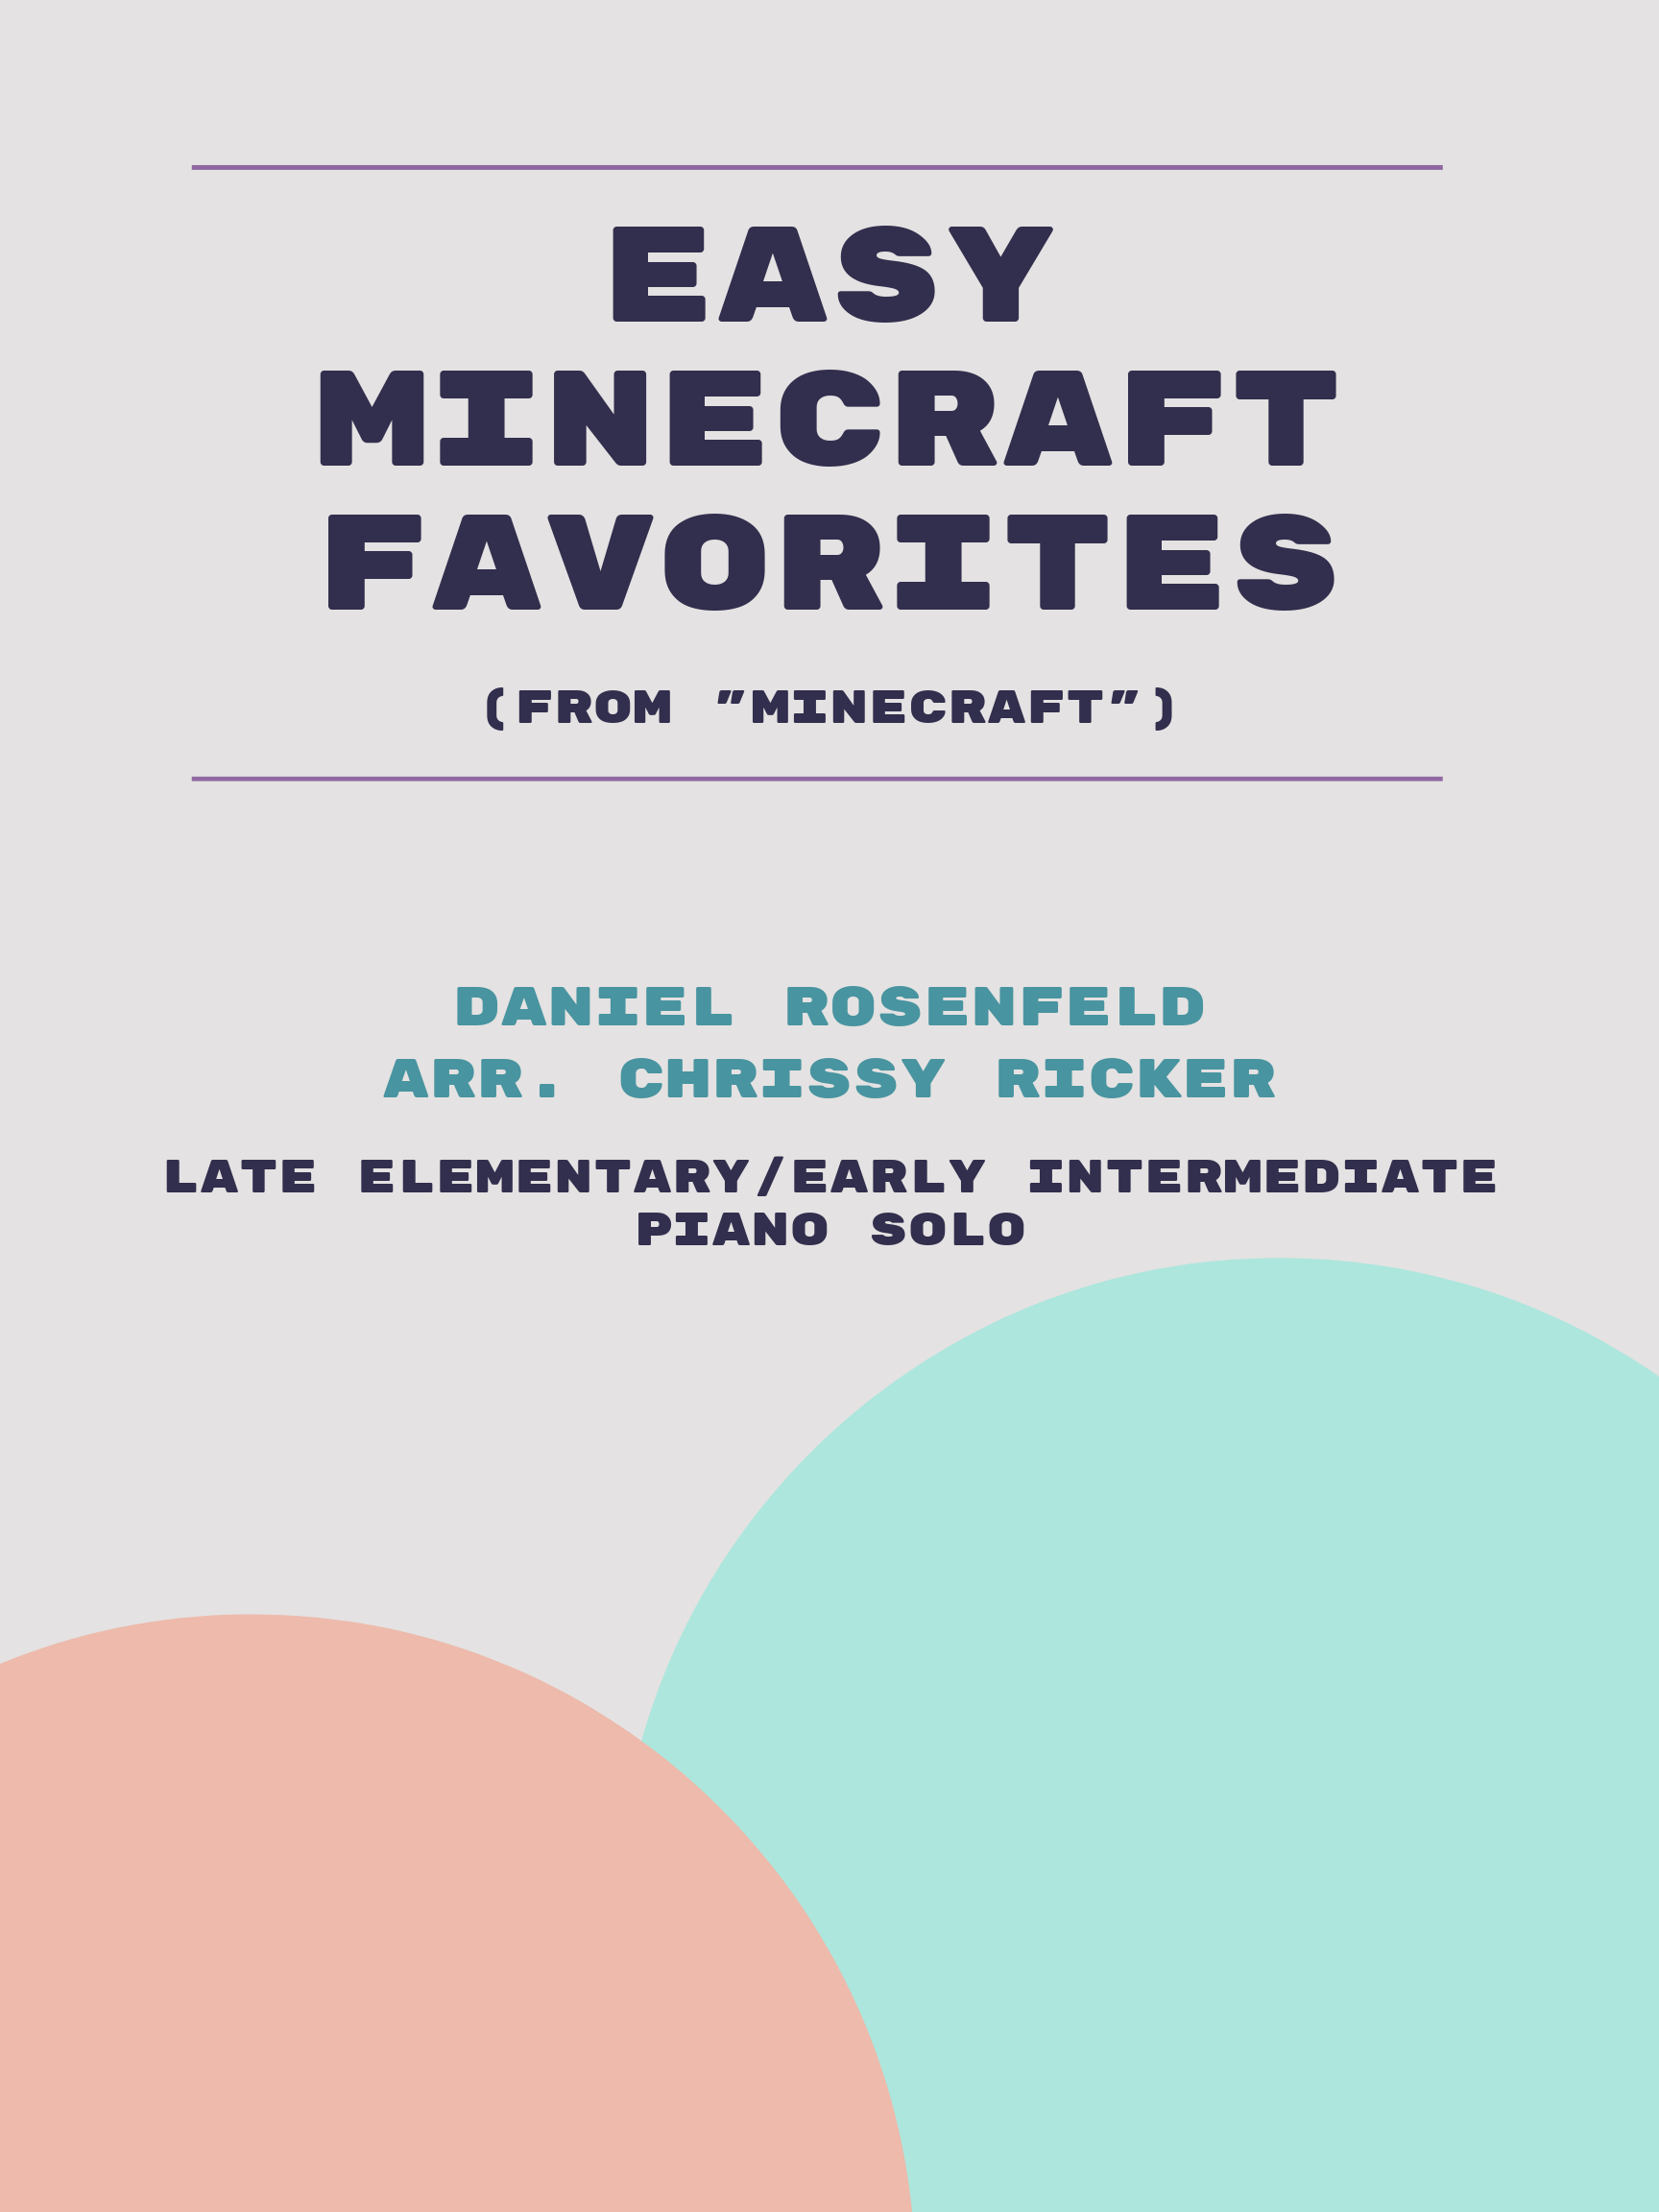 Easy Minecraft Favorites by Daniel Rosenfeld